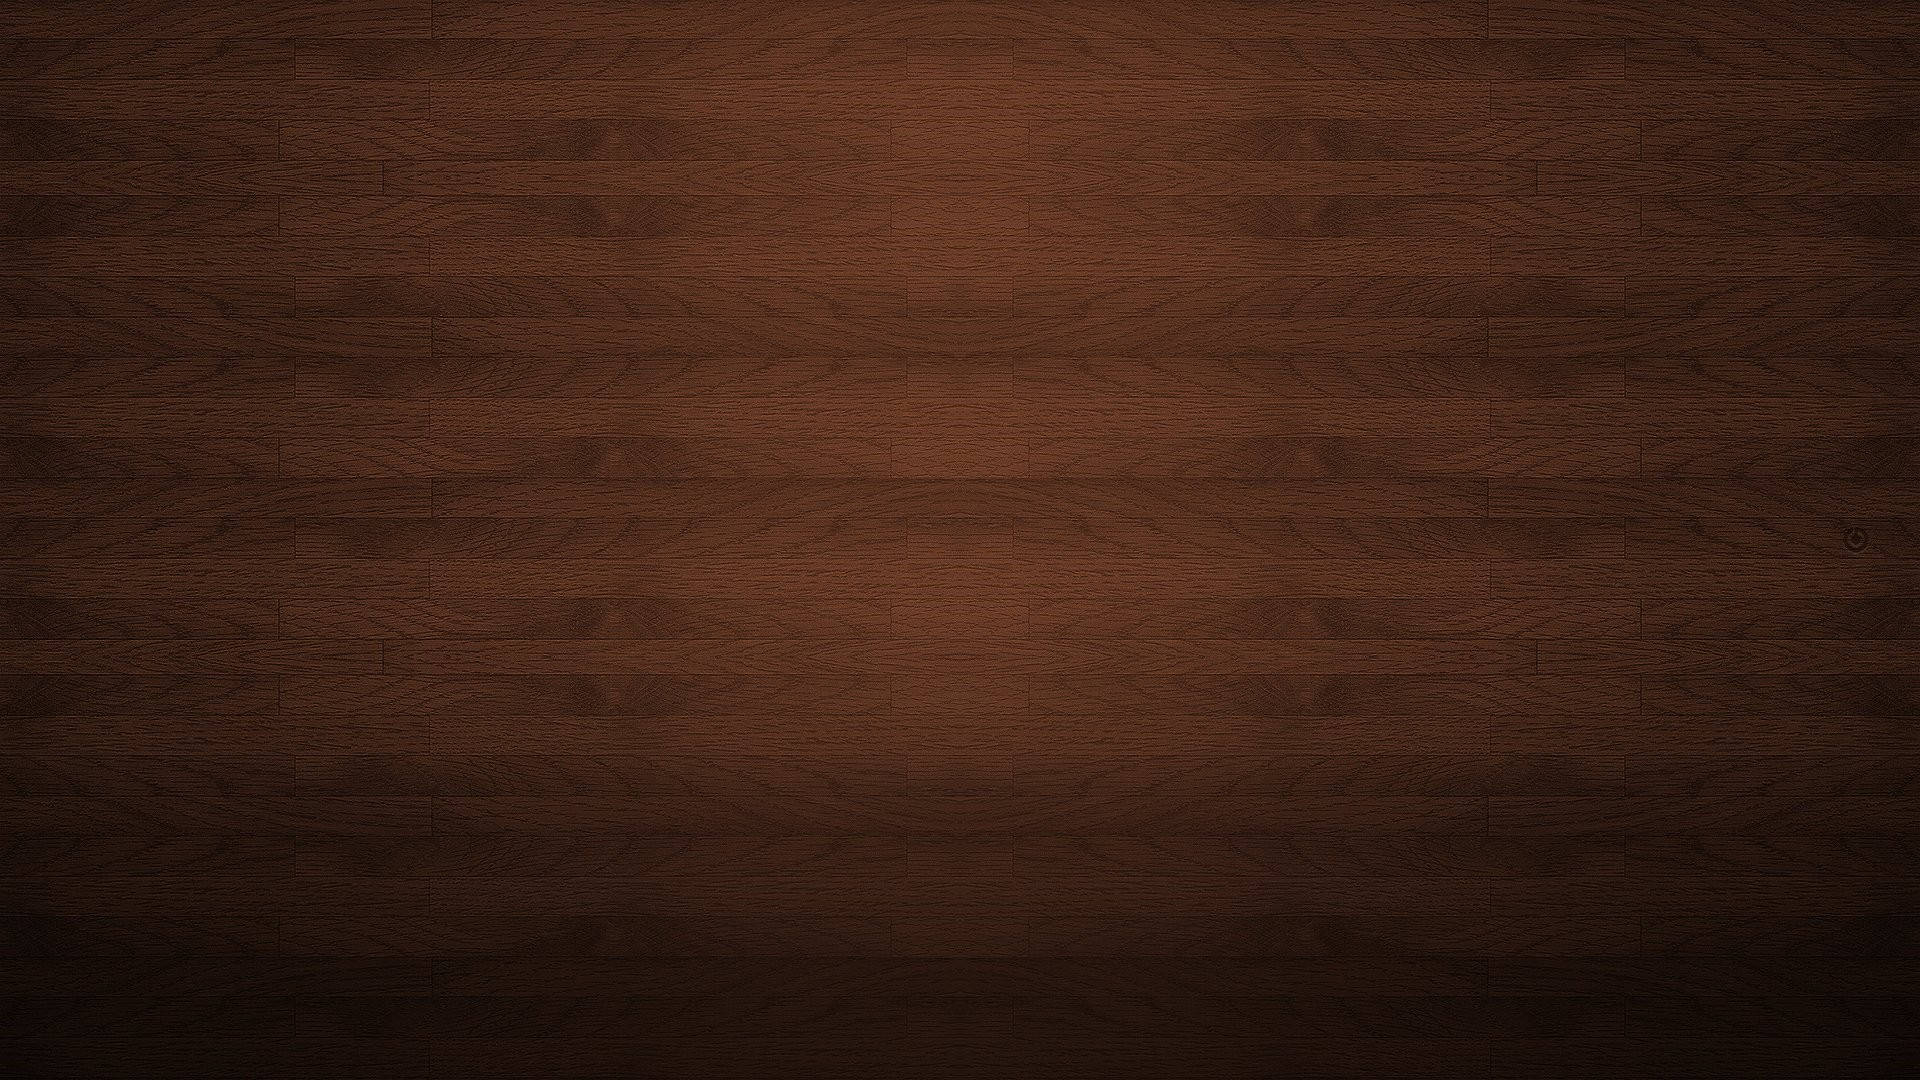 Basic Brown Wooden